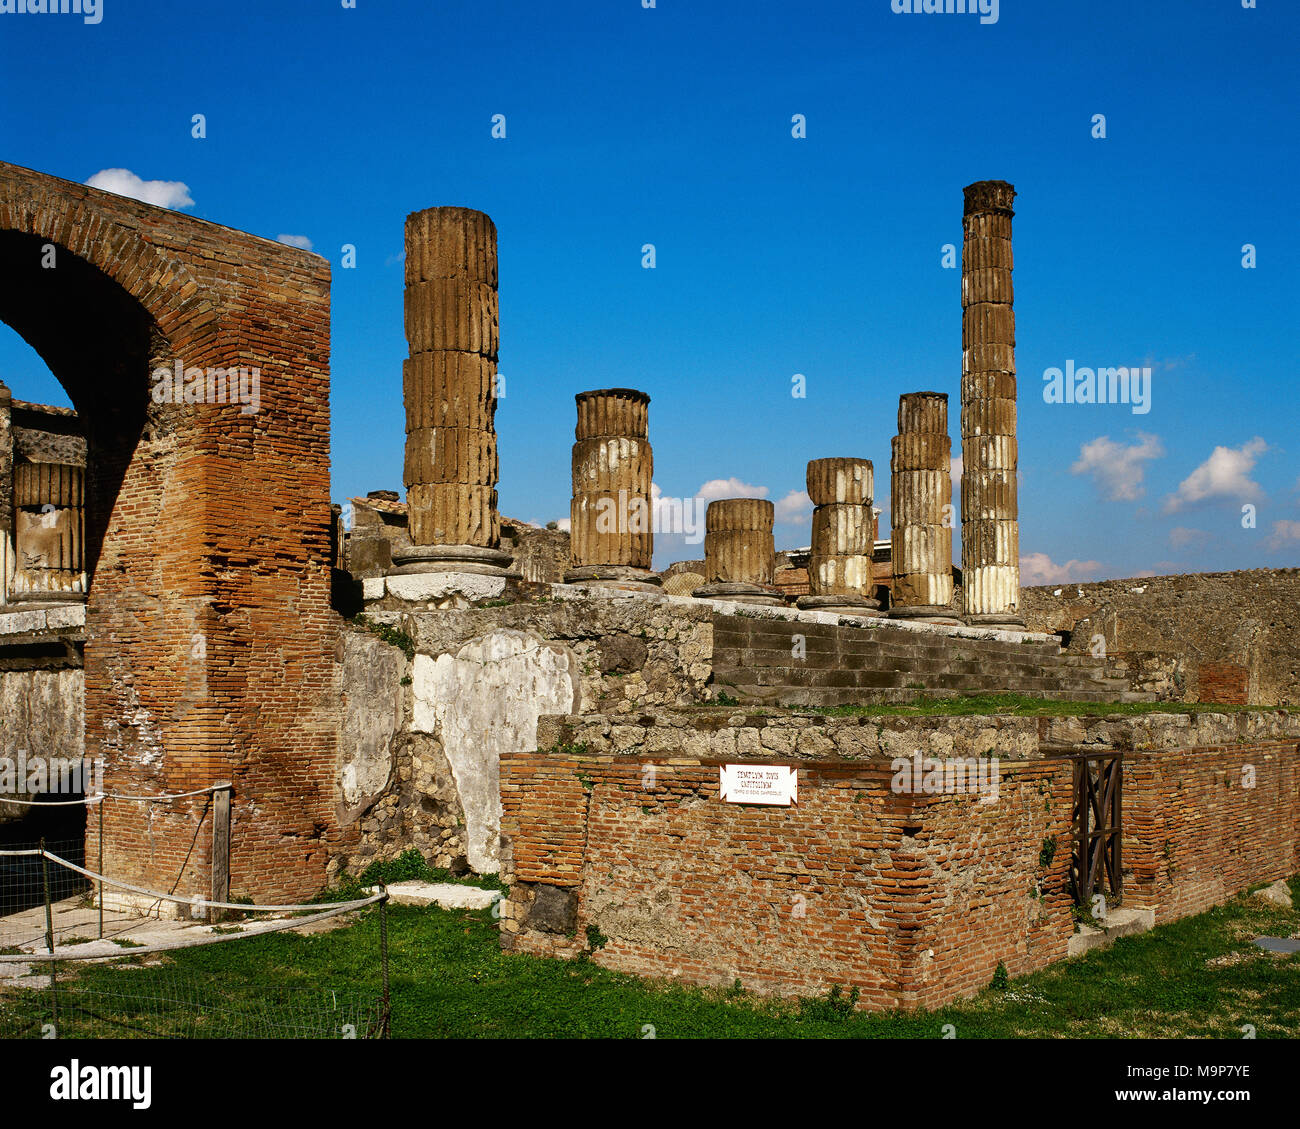 Pompeii. Ancient Roman city. Temple of Jupiter or Capitolium. Built 2nd century BC. Campania, Italy. Stock Photo